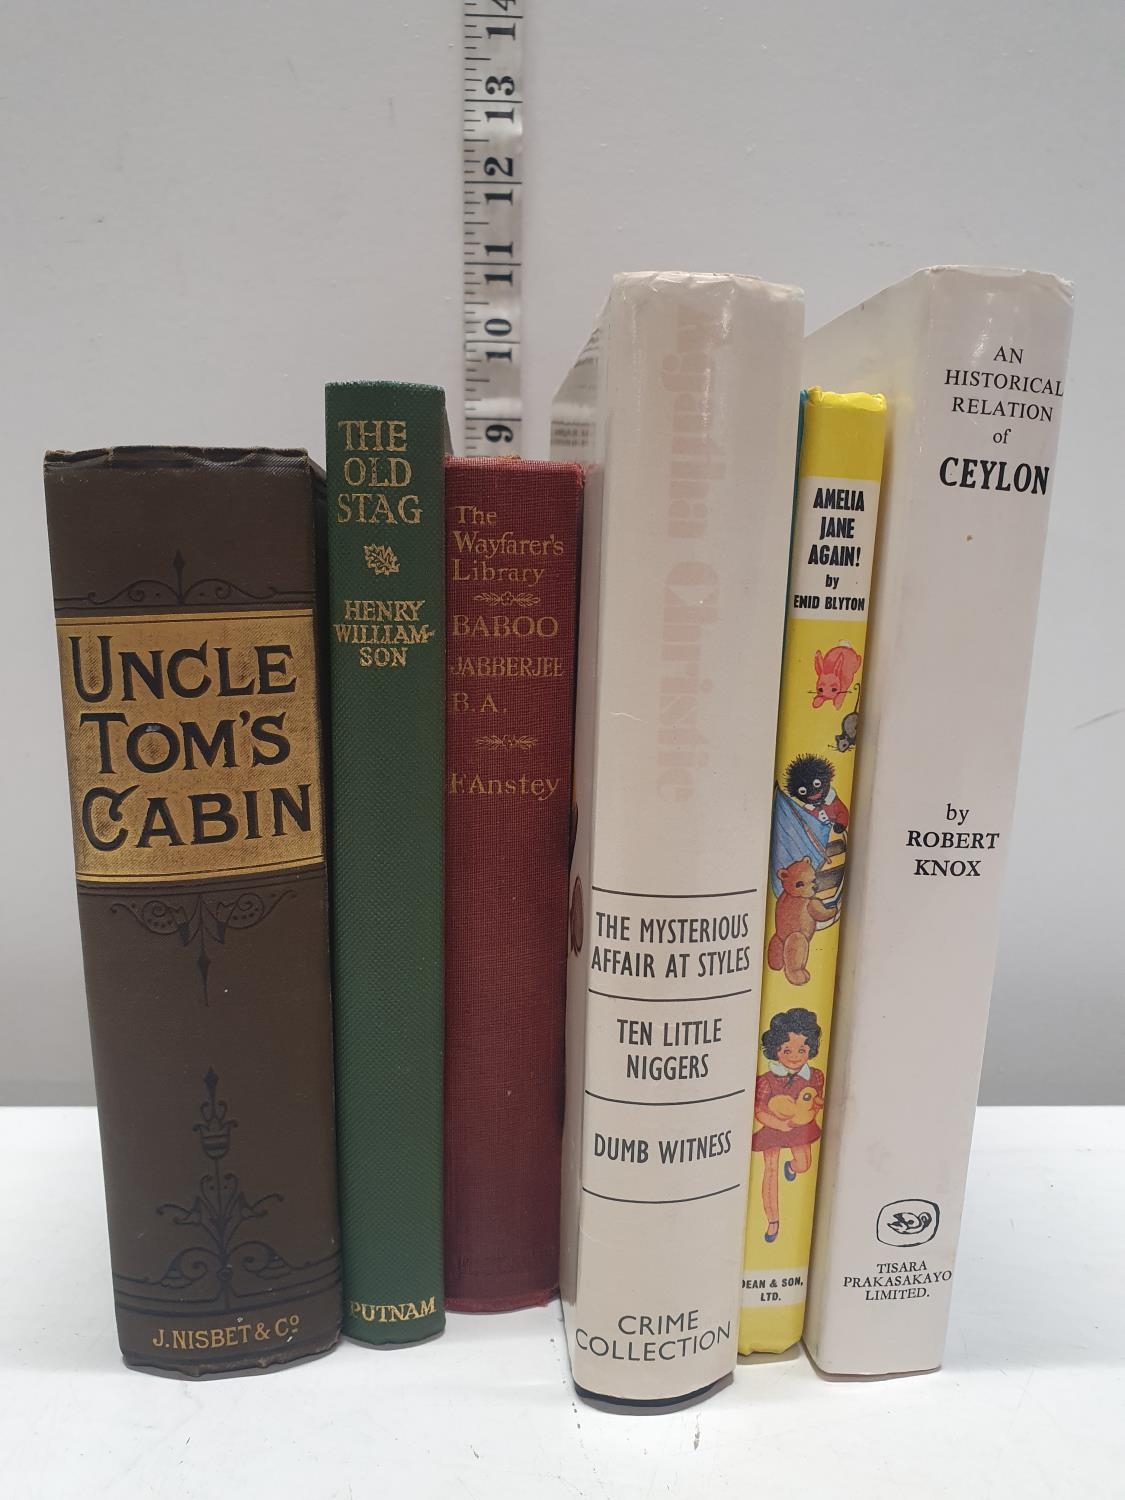 An assortment of vintage books